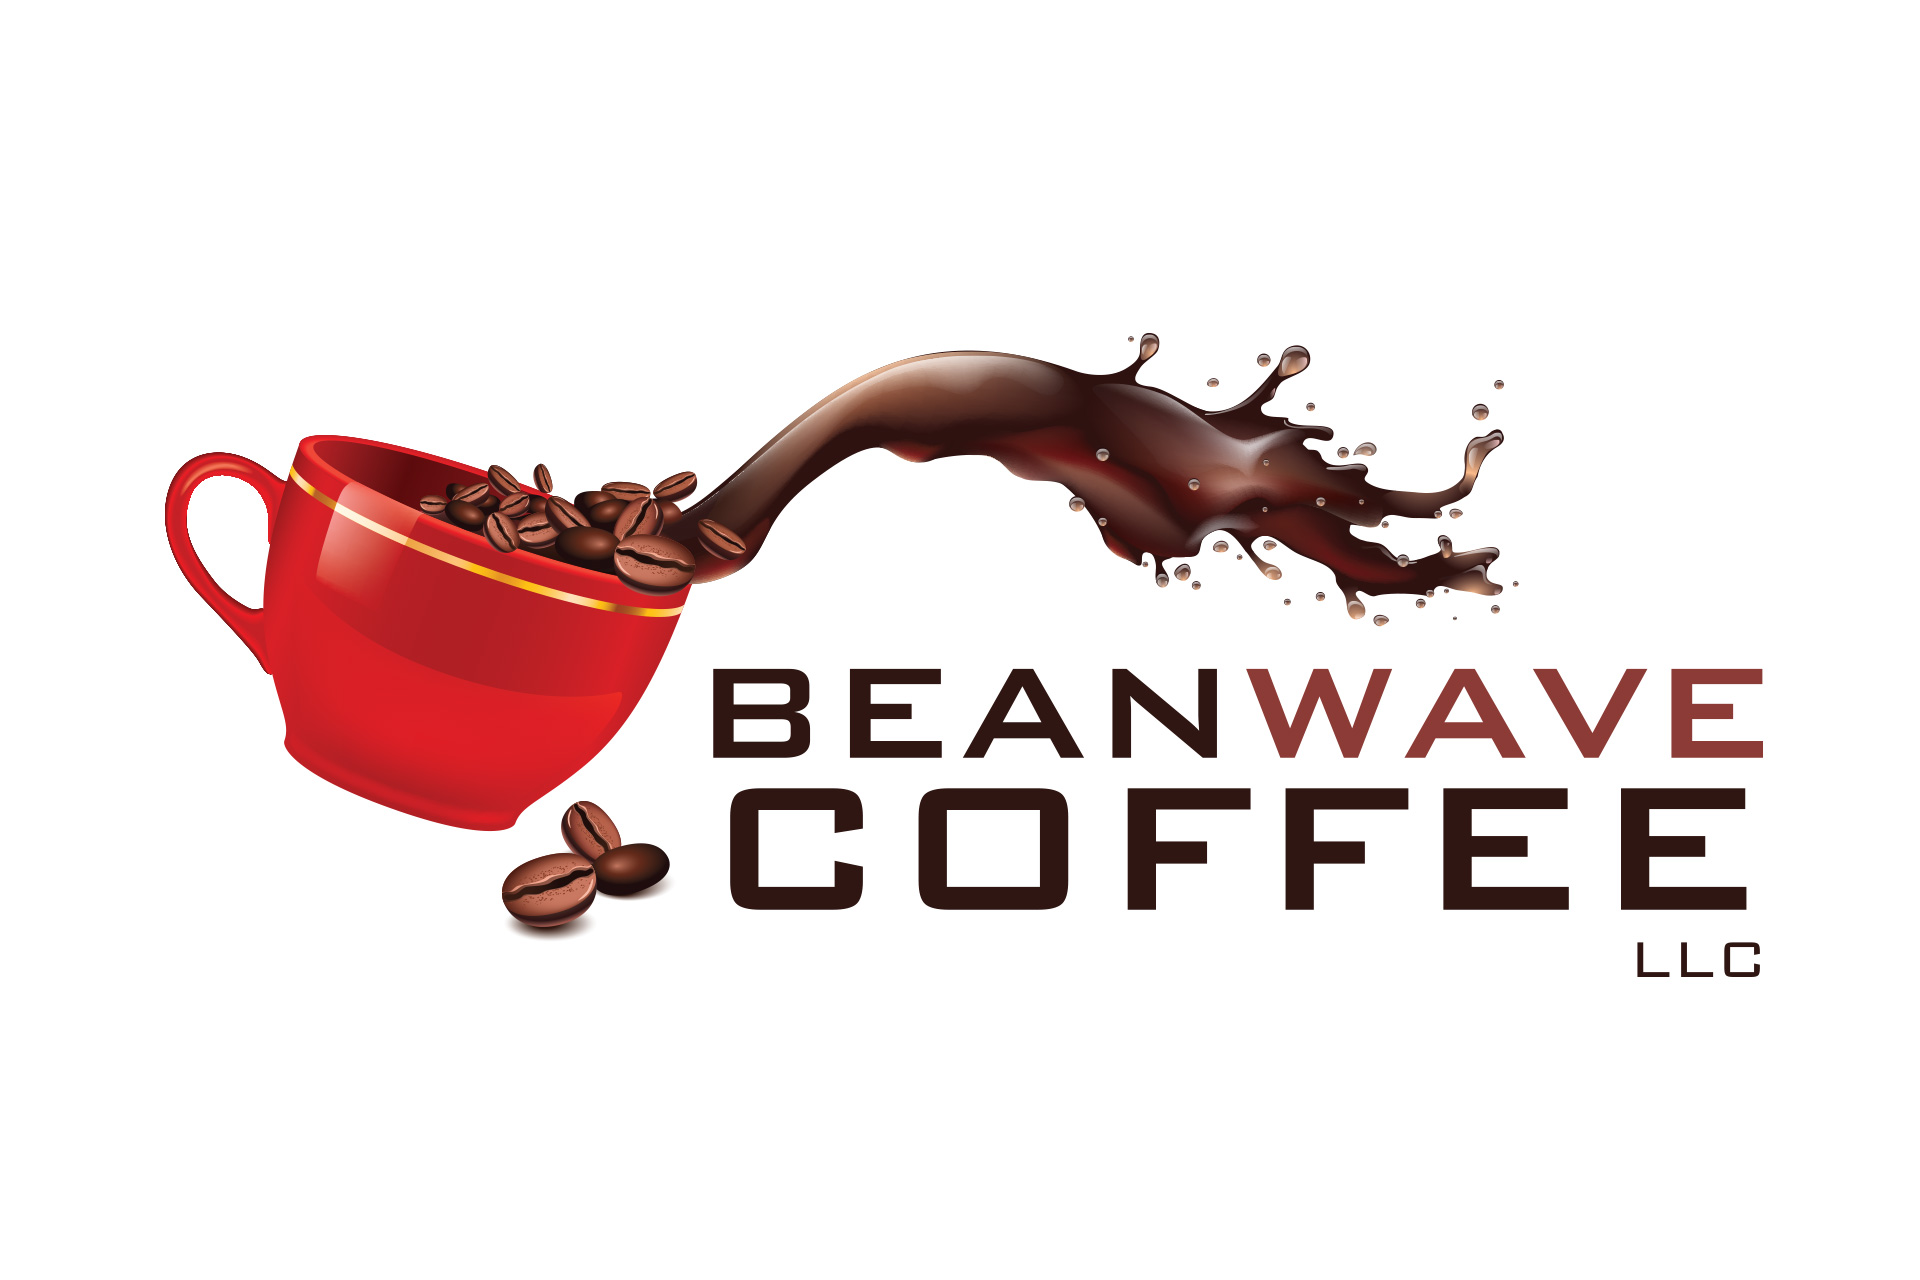 Beanwave Coffee, LLC